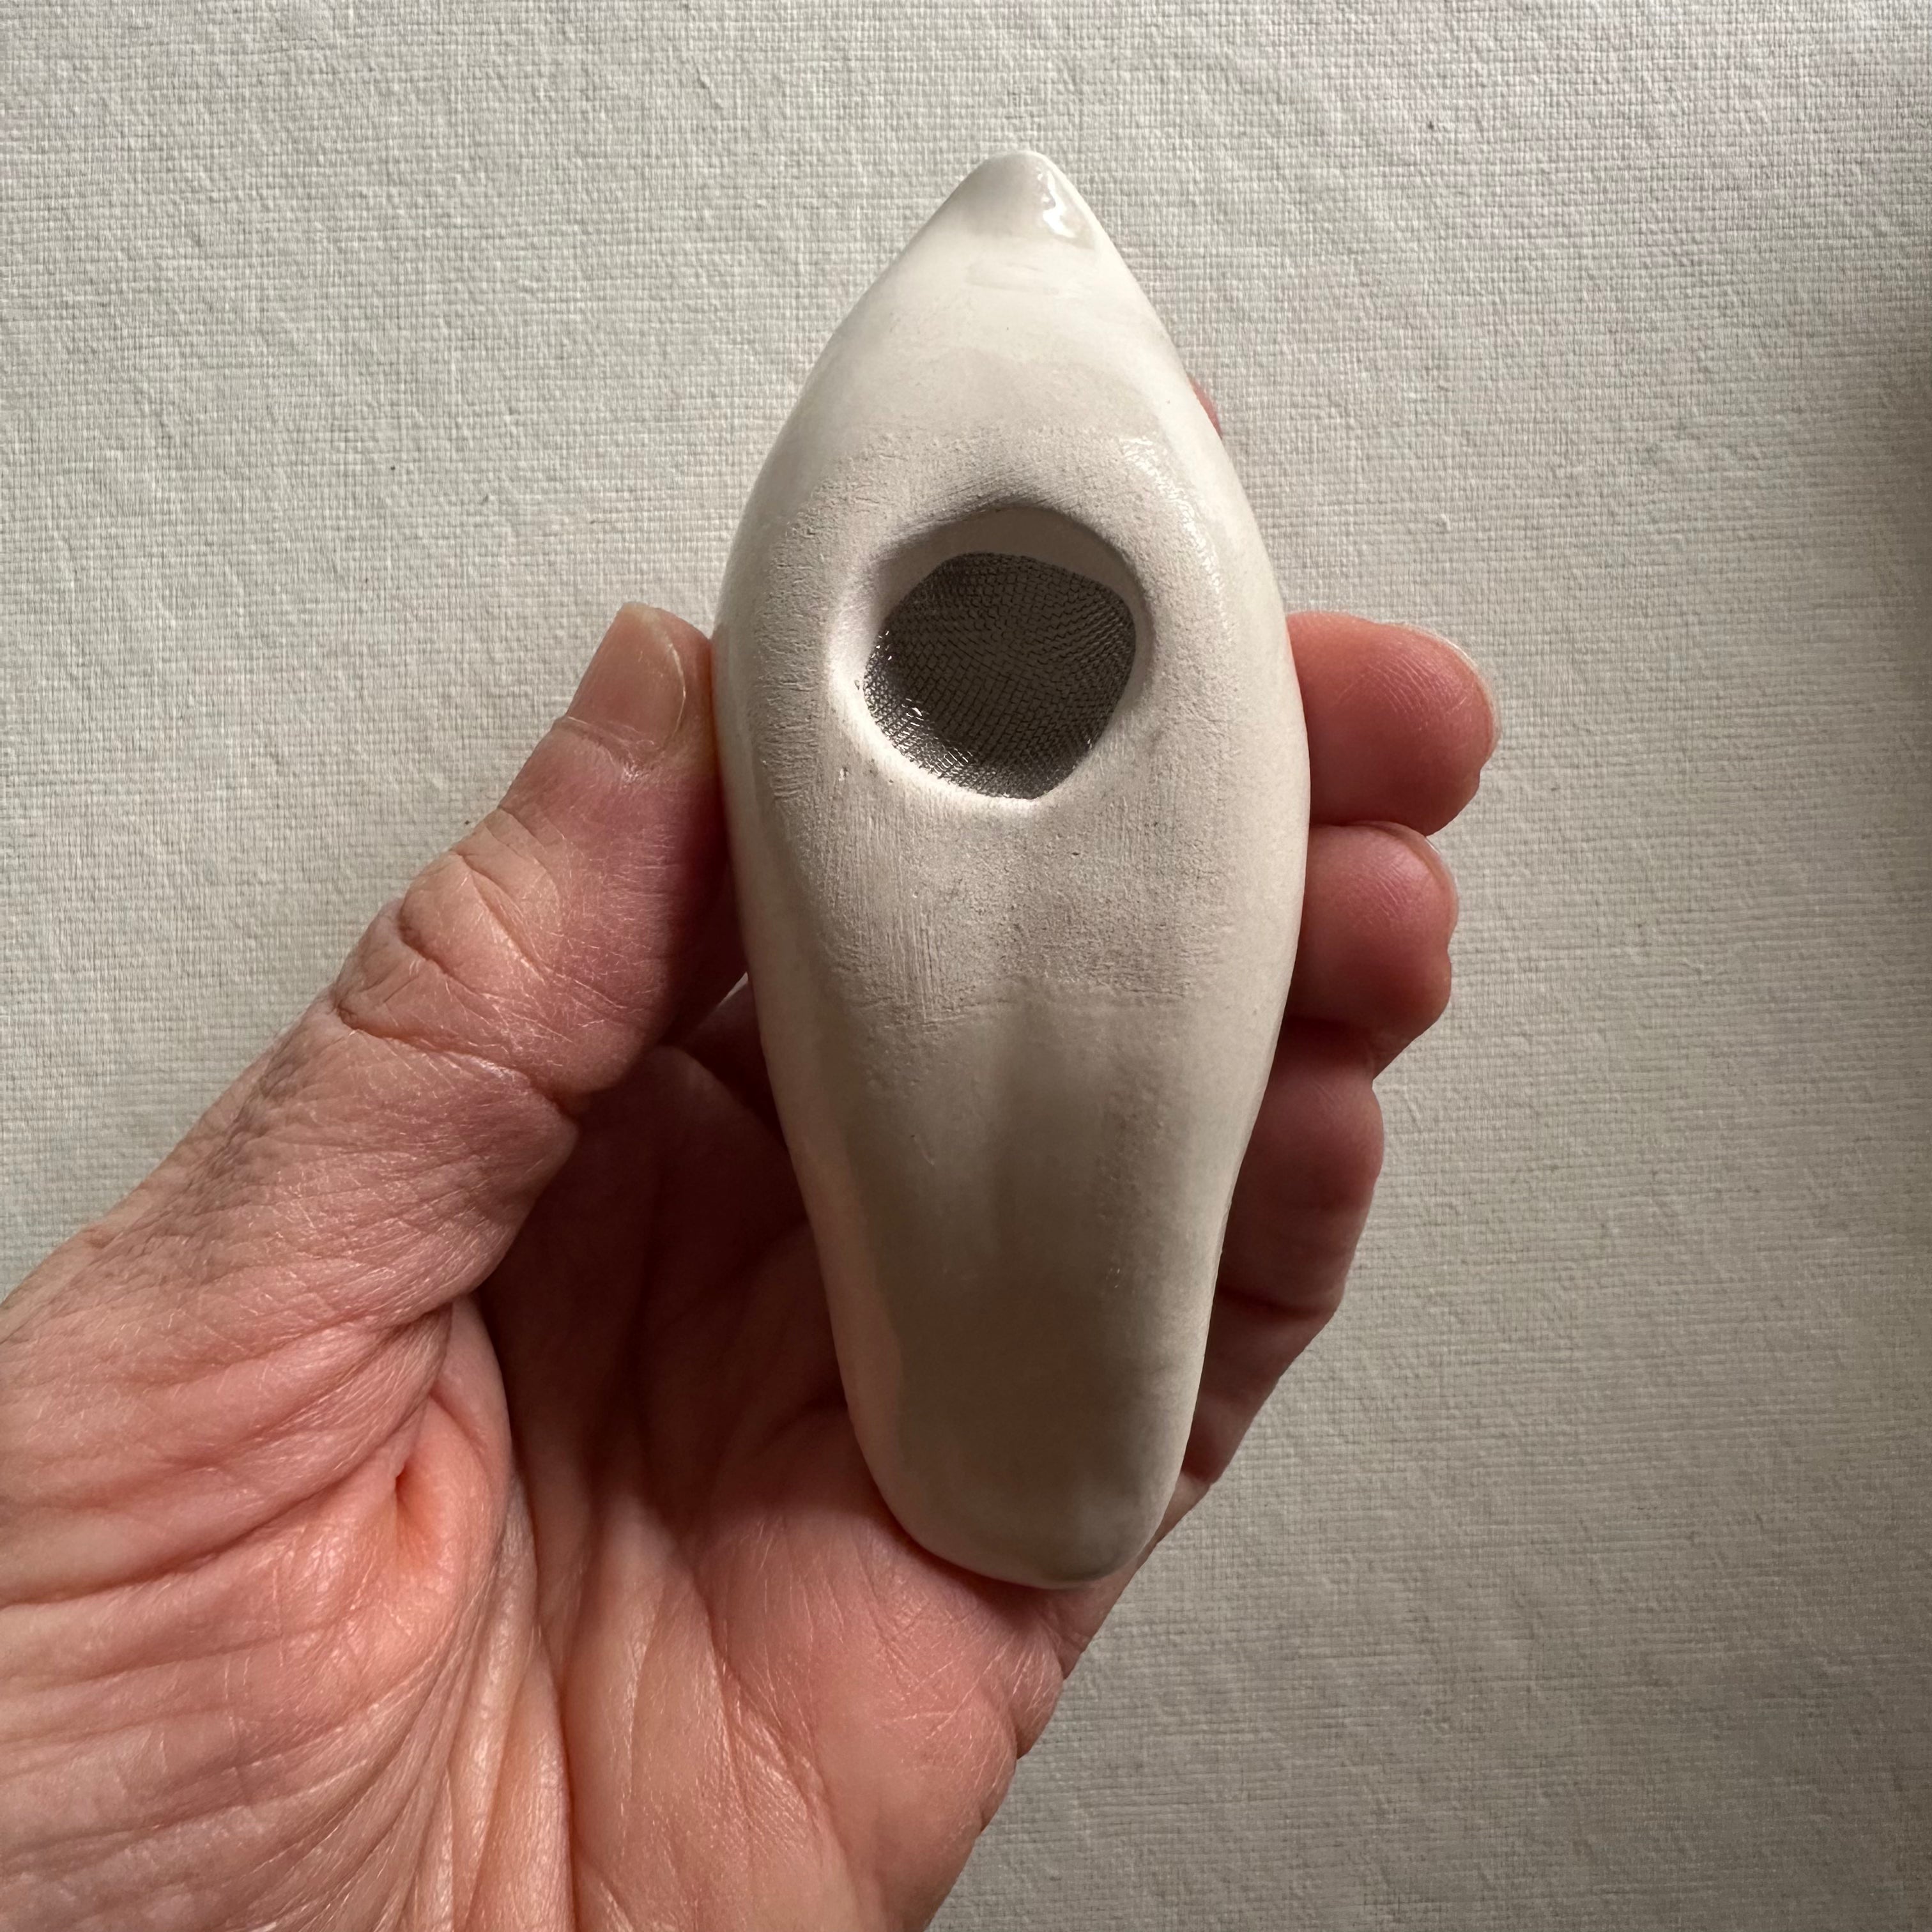 Ceramic White Bird-Pipe for Herbs